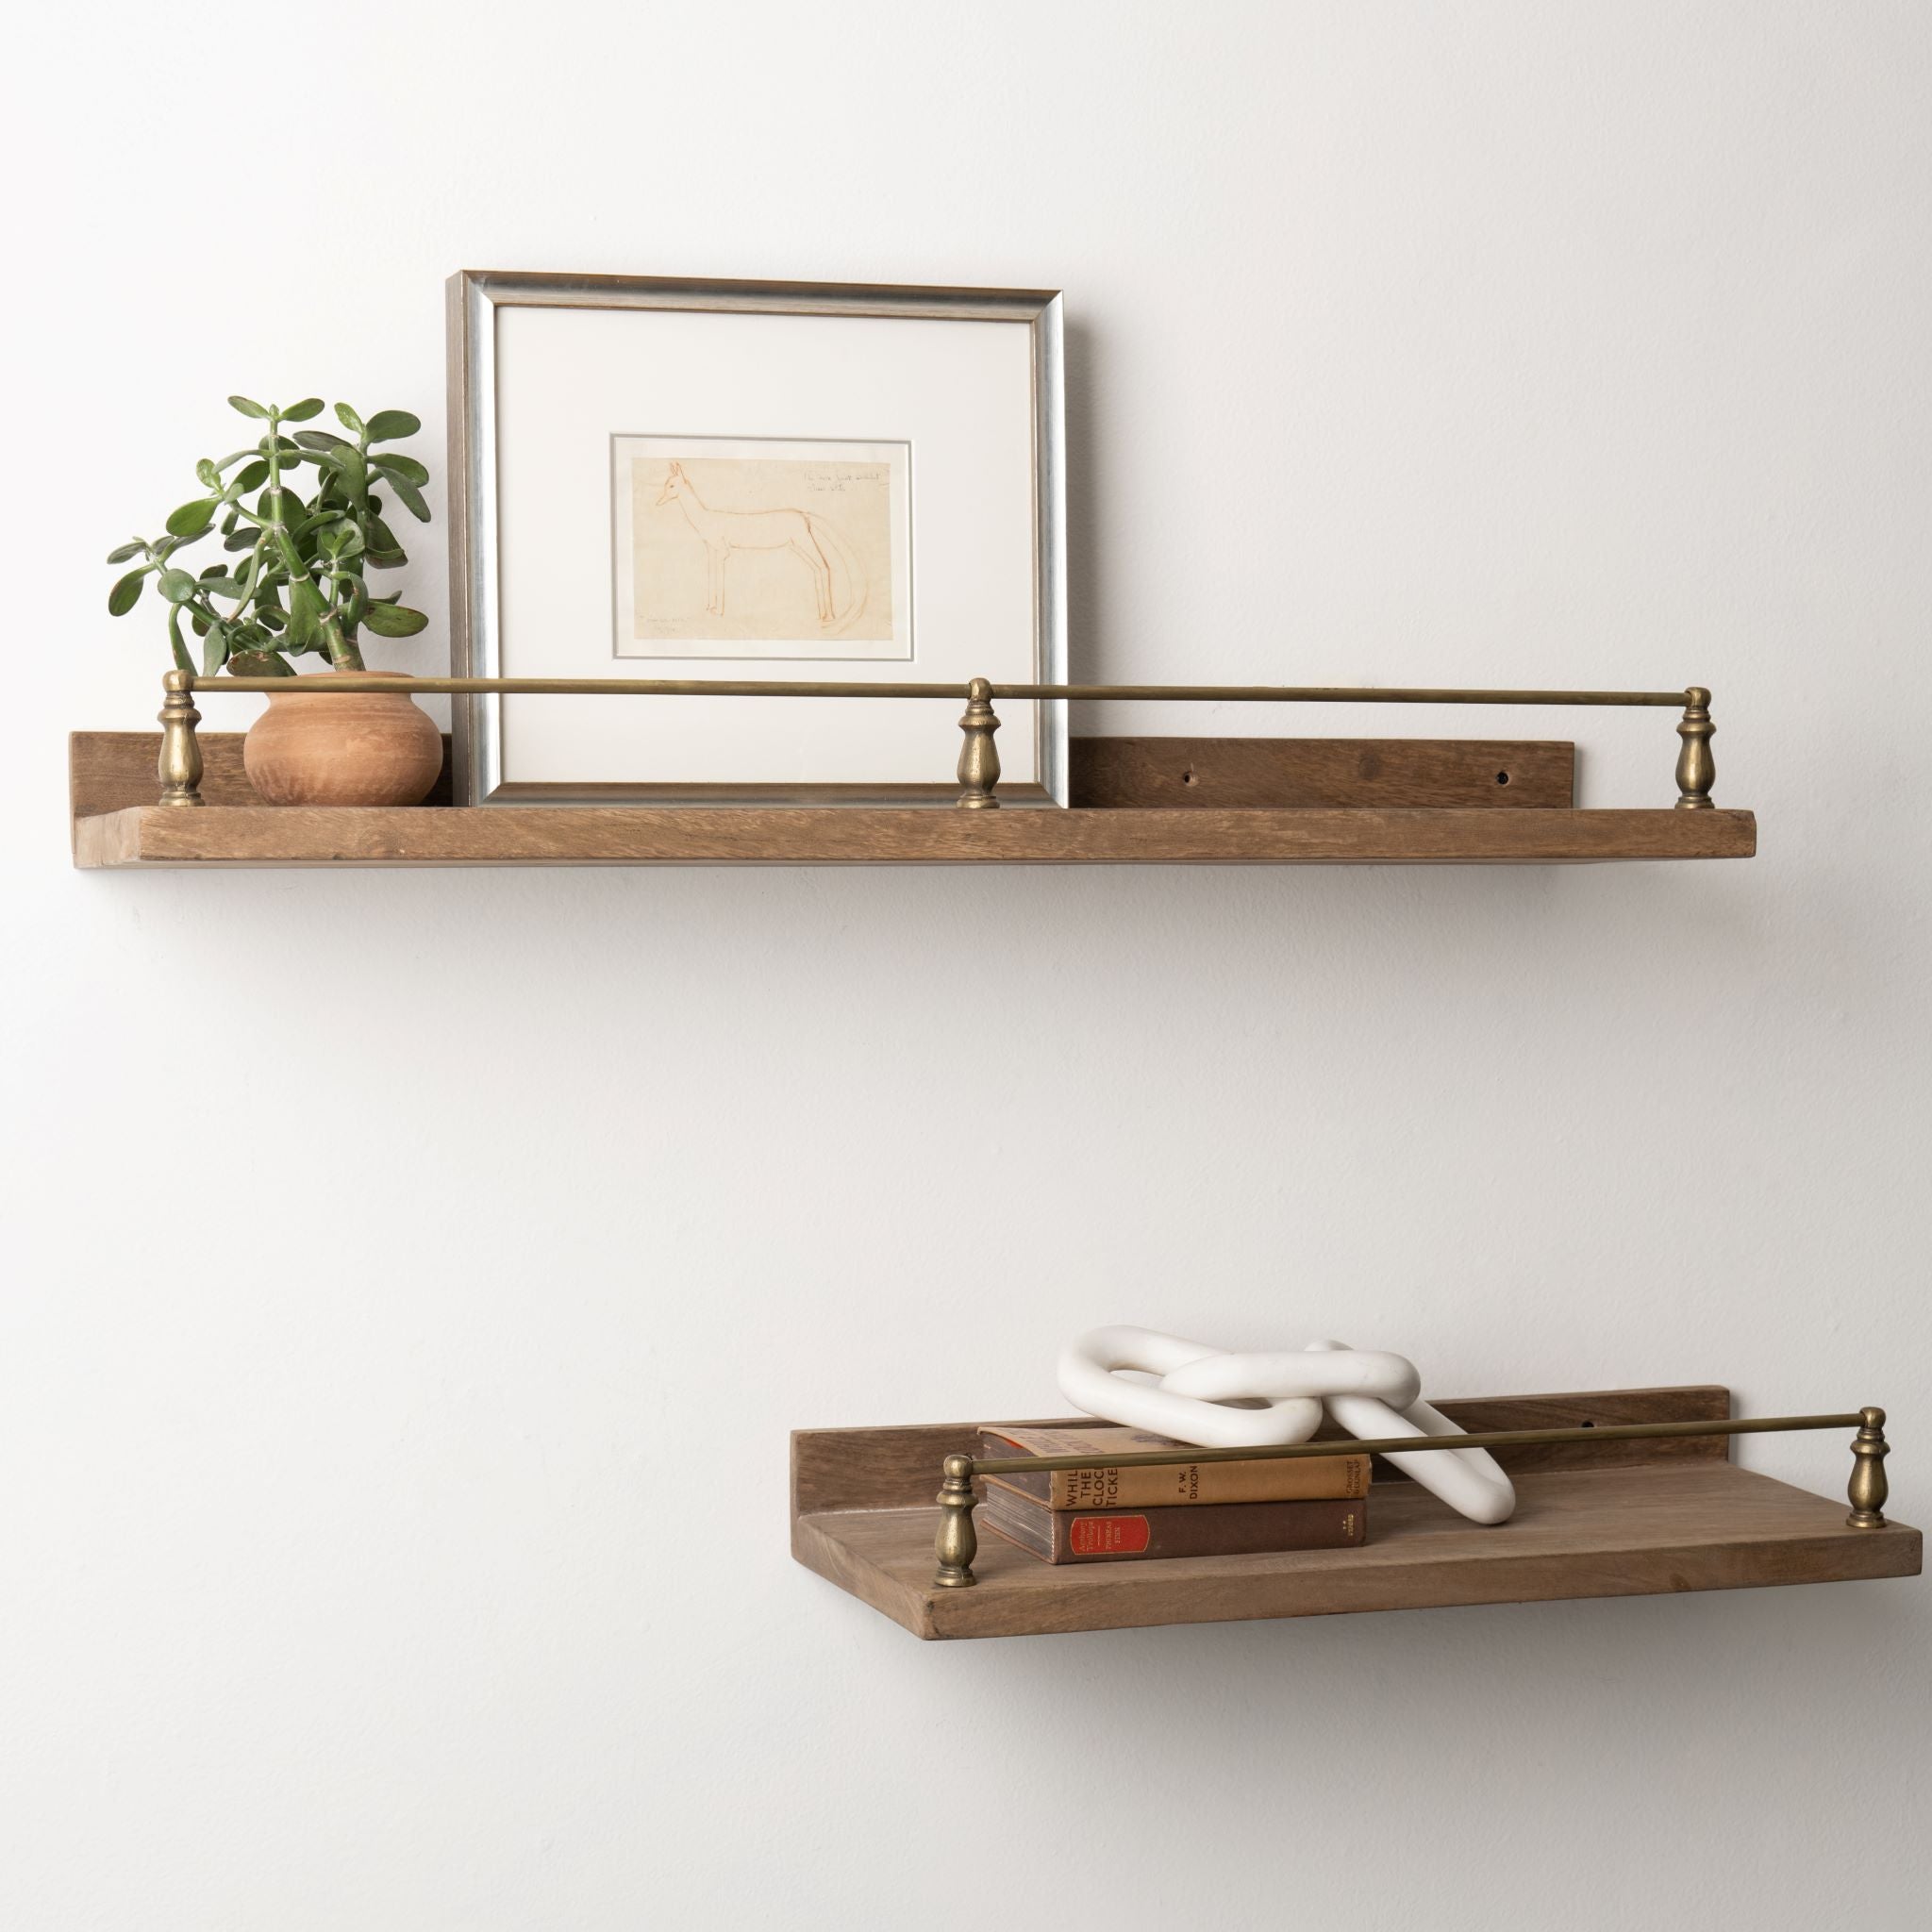 Magnolia Senna Wood and Brass Wall Shelf With DecorItems range from $90.00 to $120.00